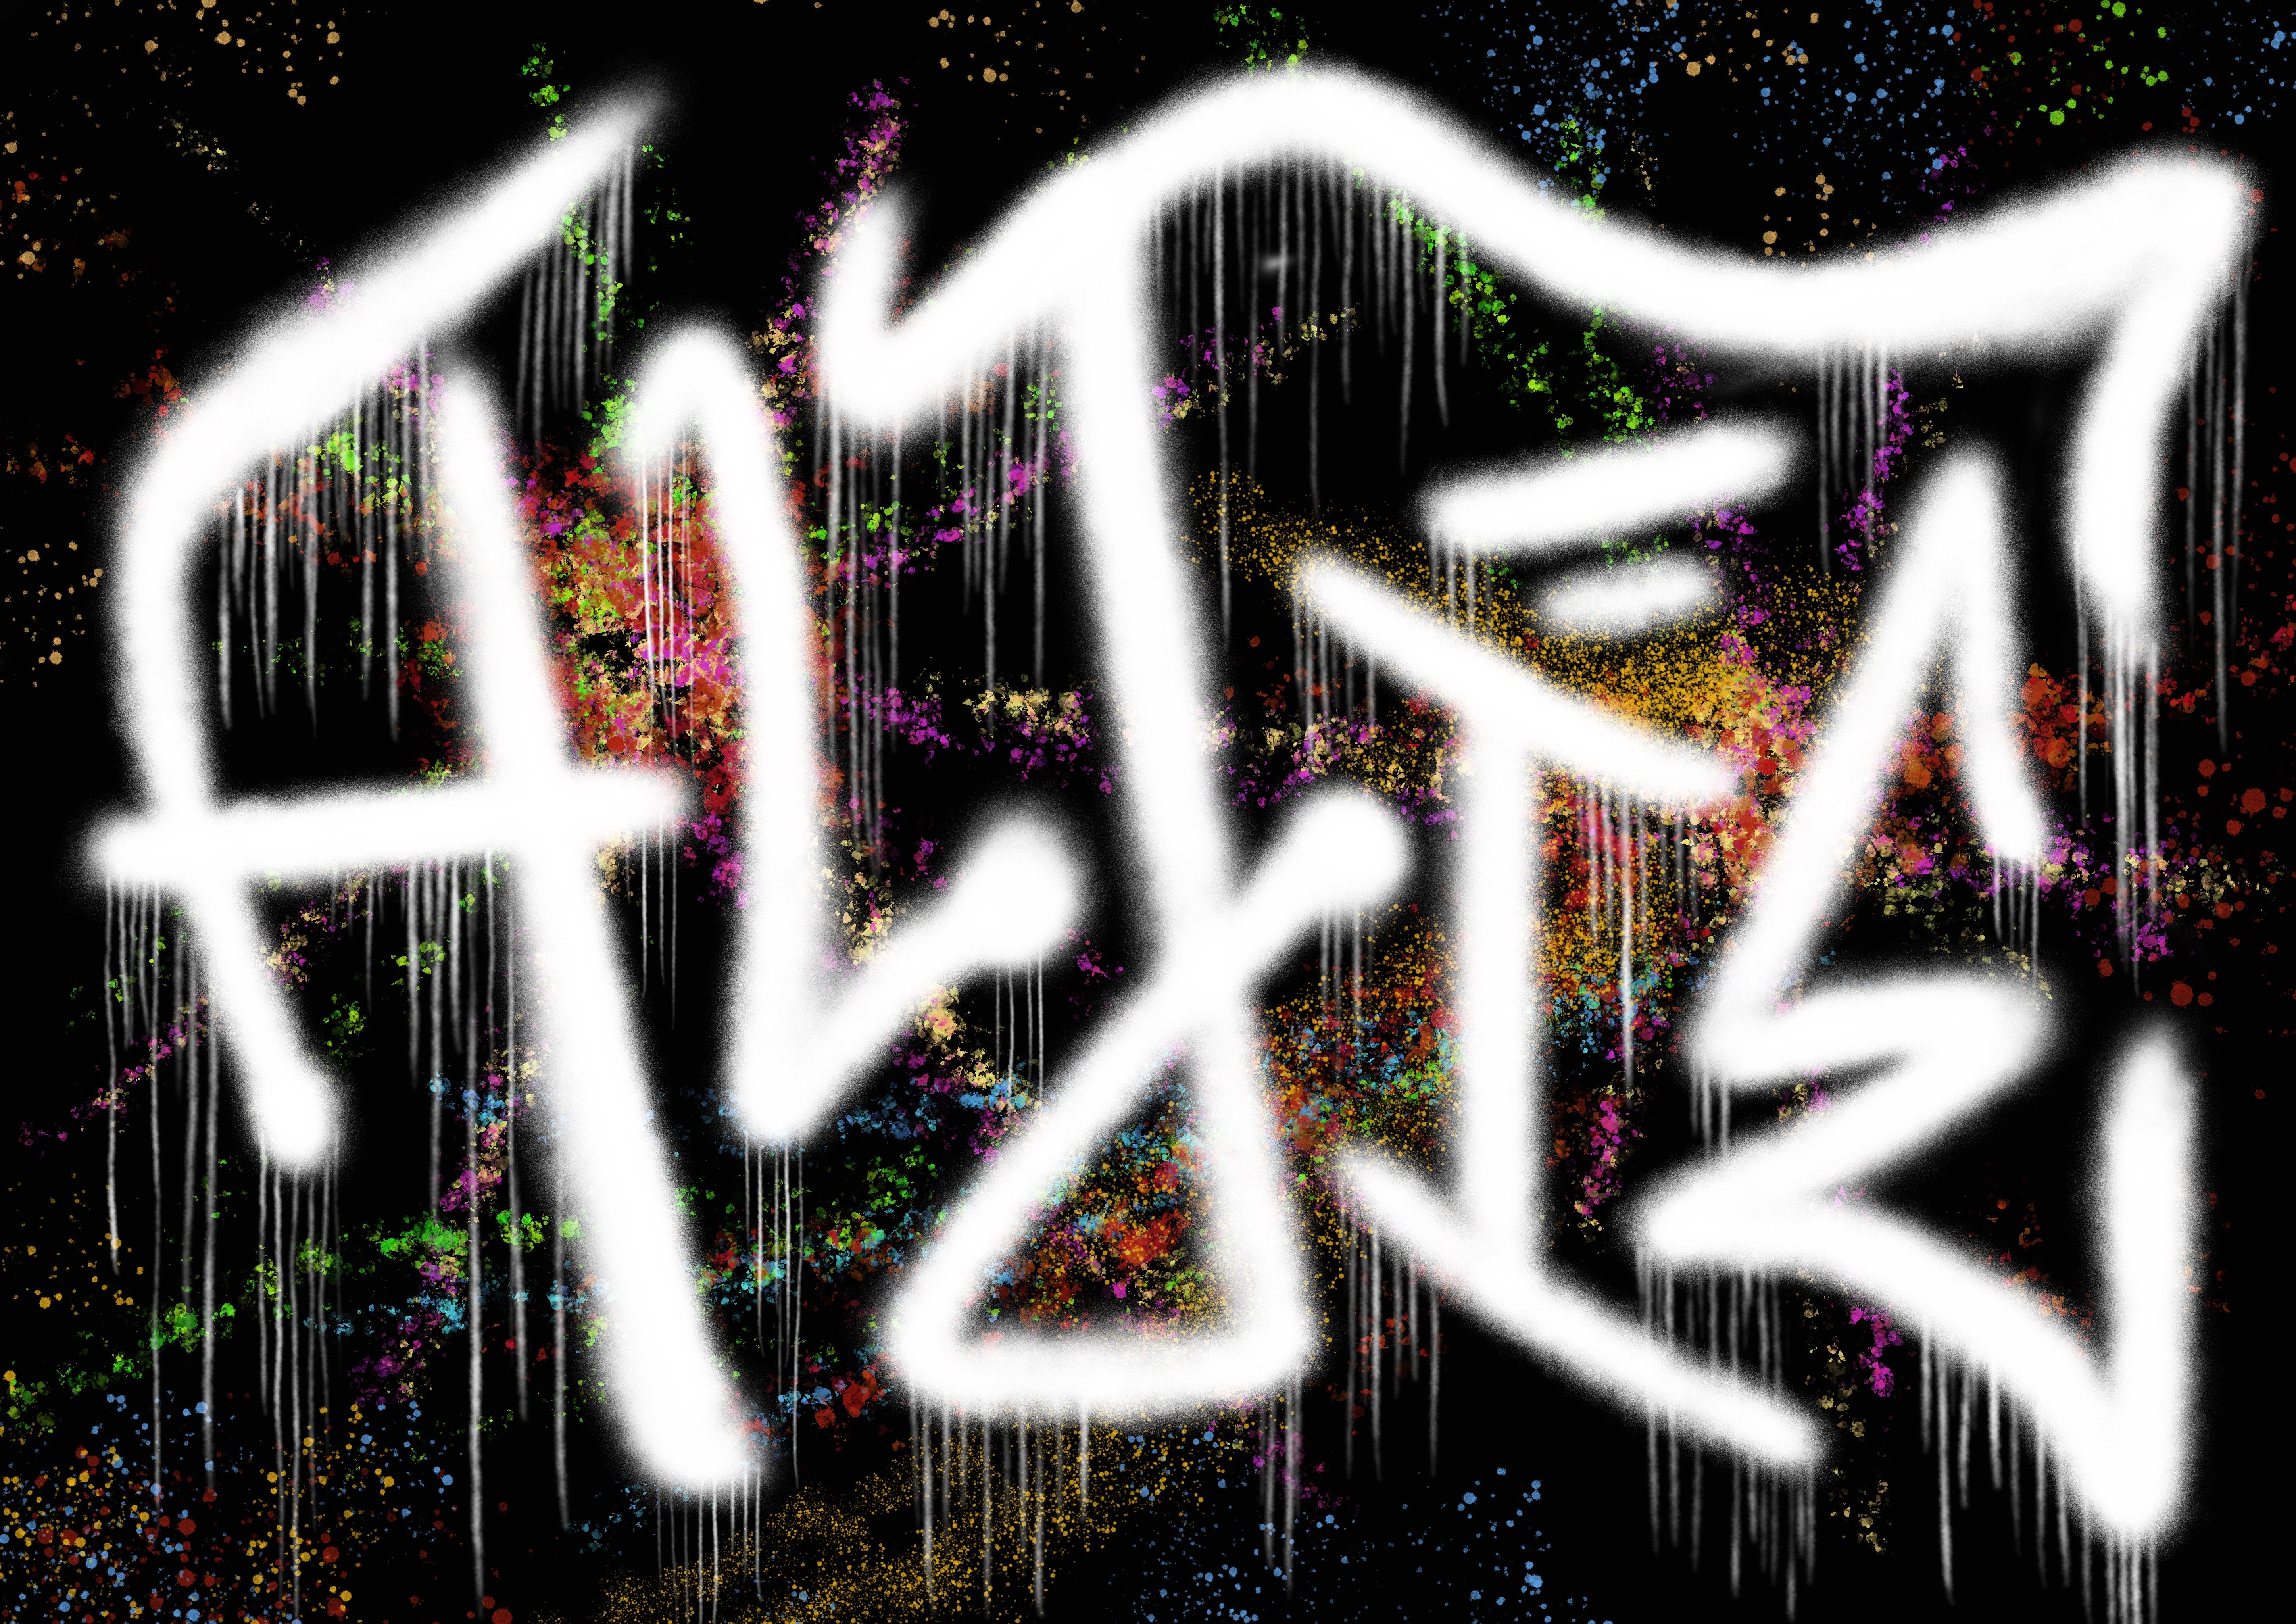 grafitti